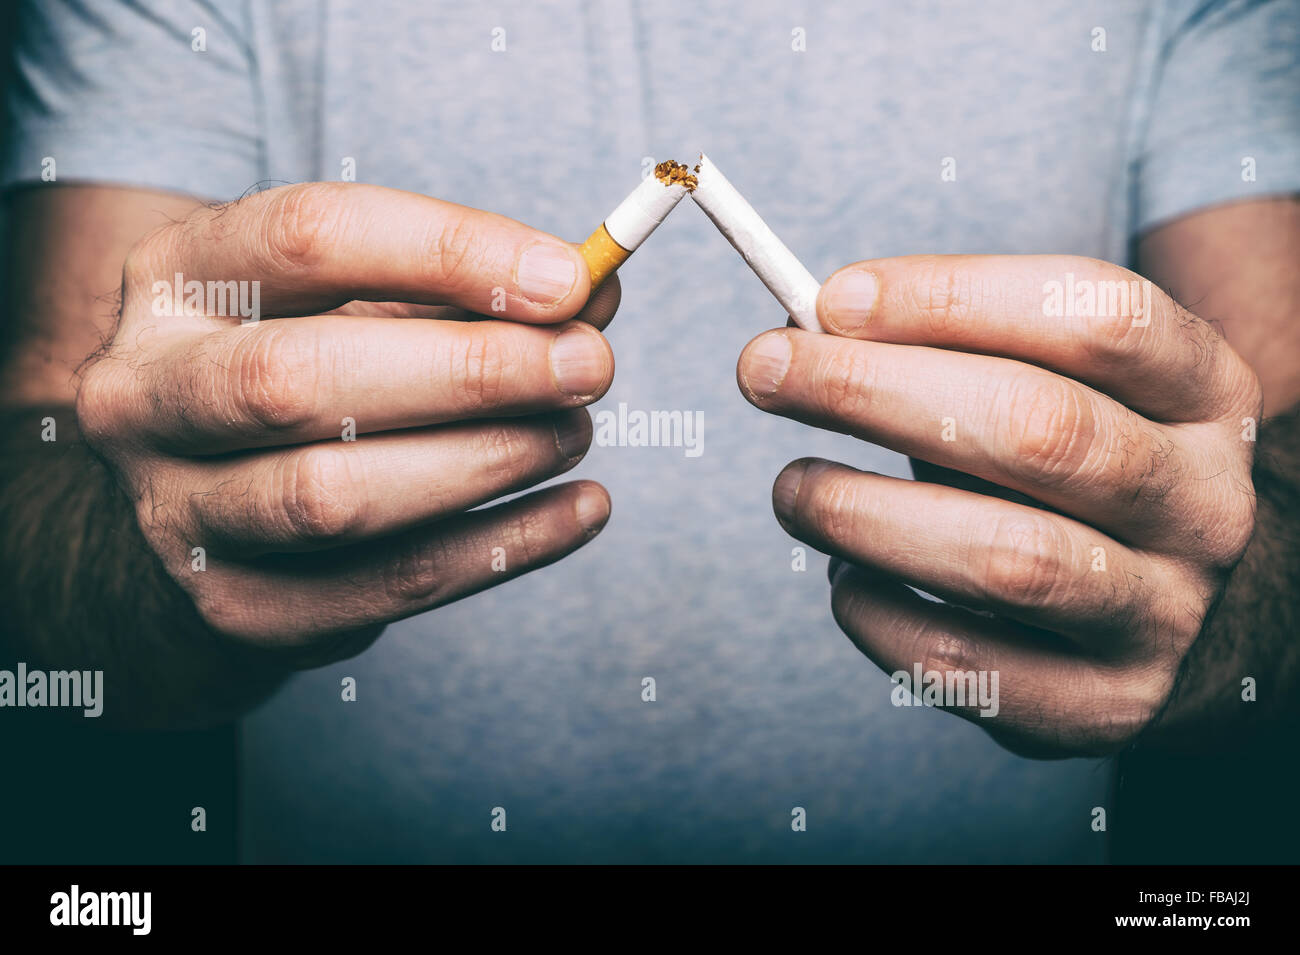 Quitting smoking - male hand crushing cigarette Stock Photo